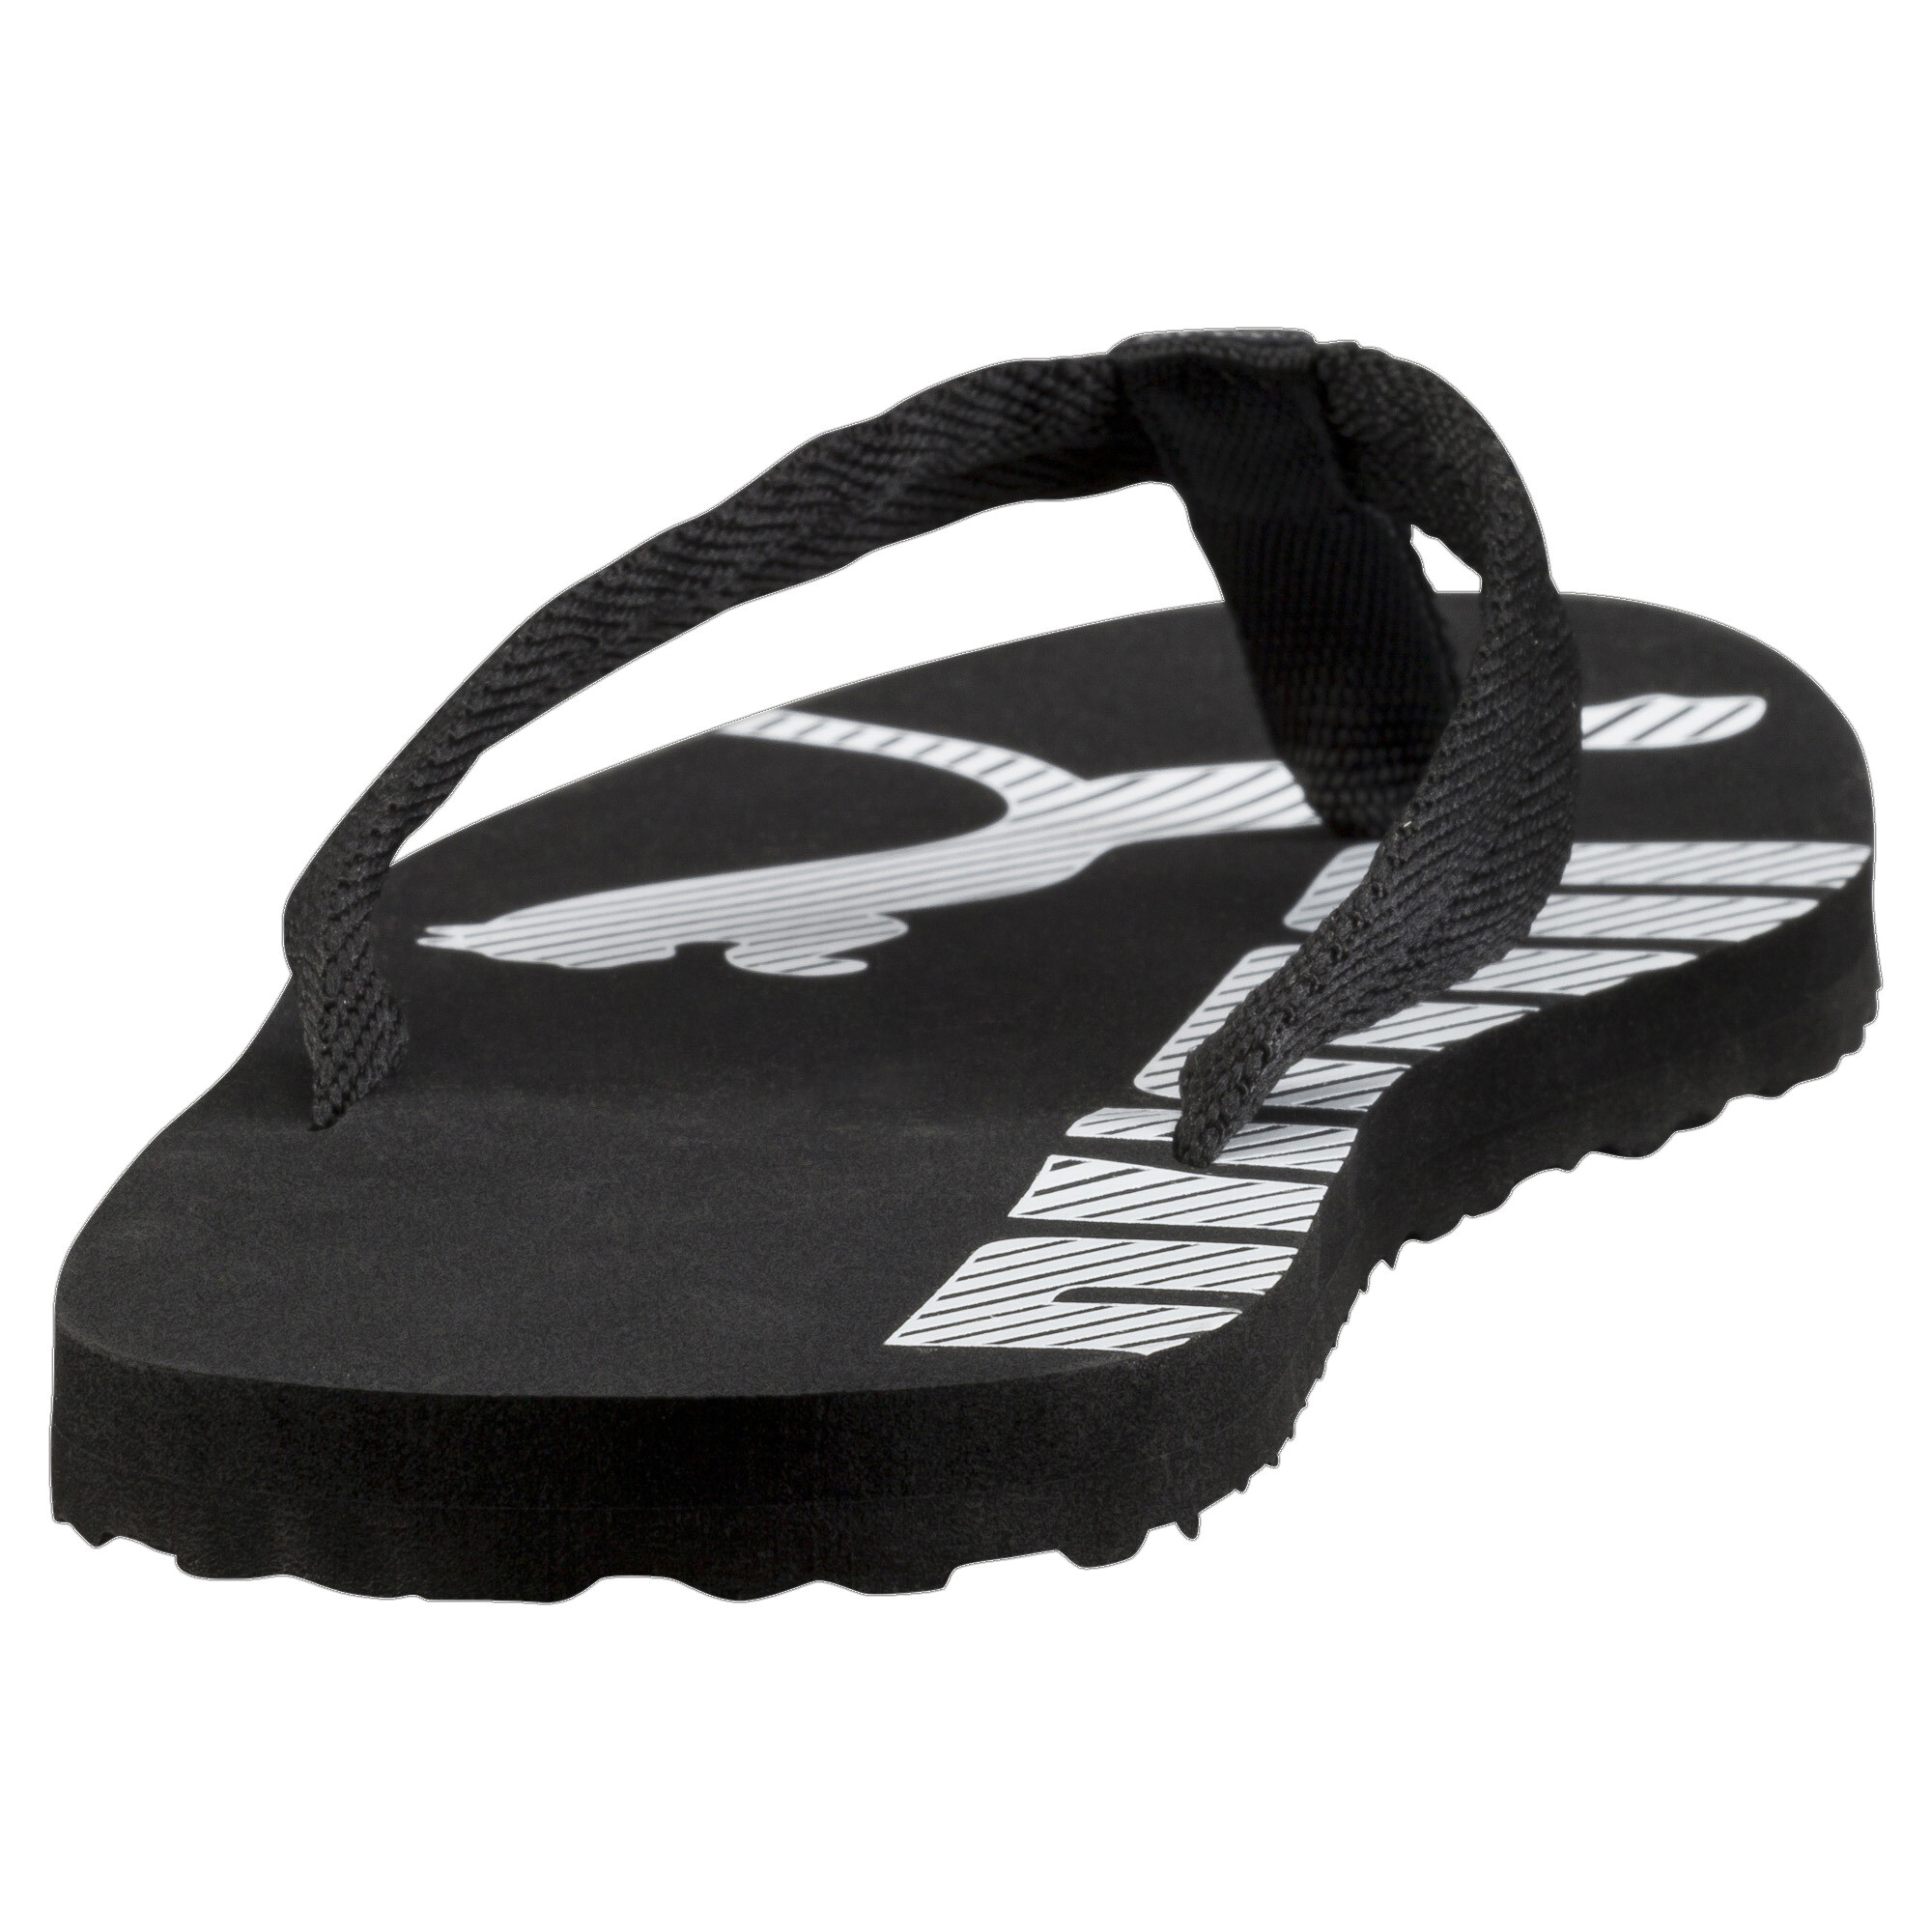 Men's PUMA Epic Flip V2 Sandals In Black, Size EU 42